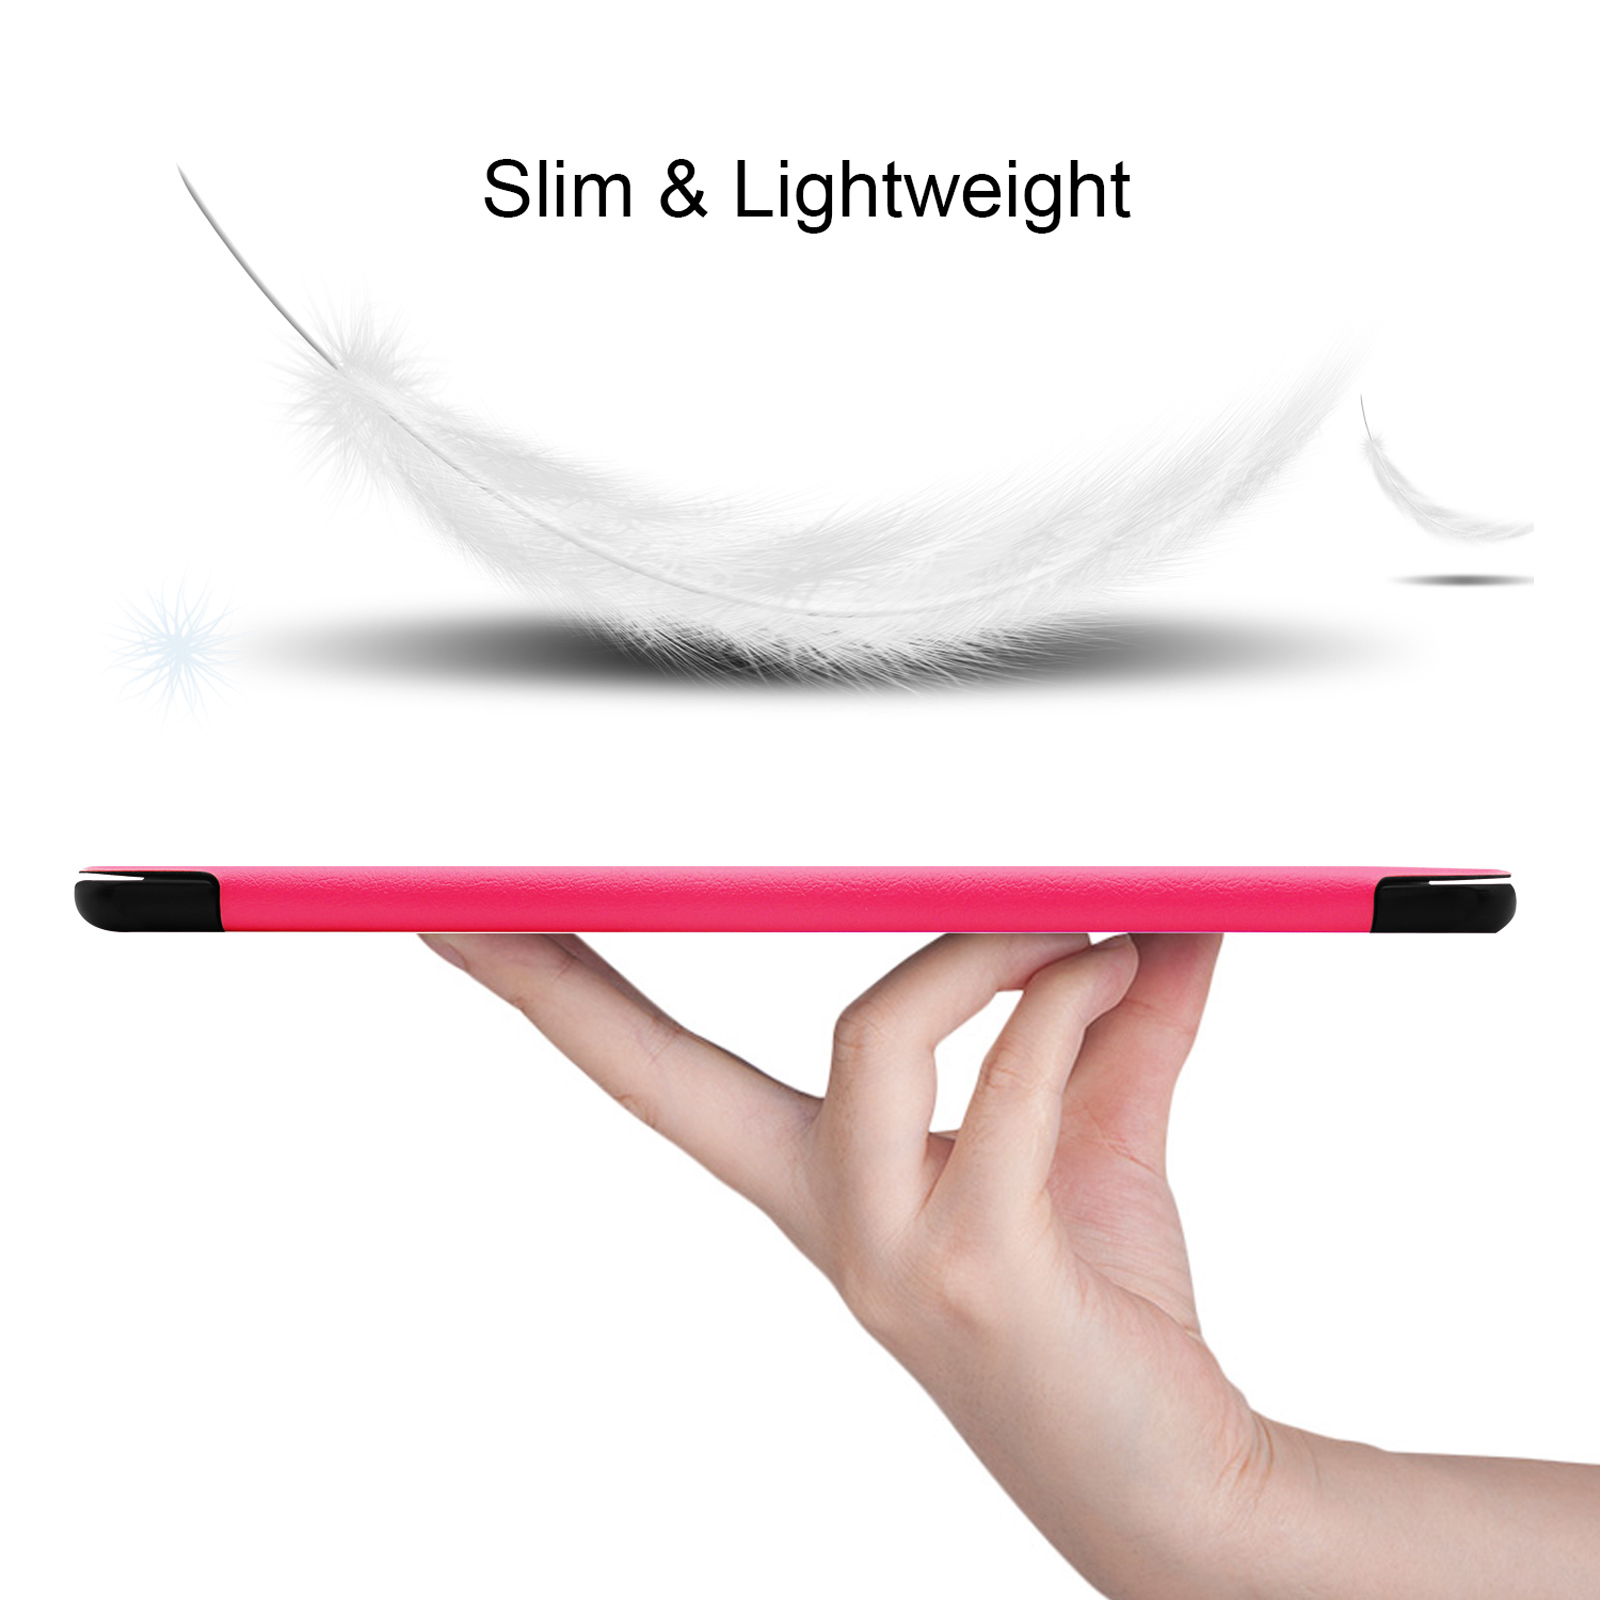 LOBWERK Hülle Zoll Samsung Bookcover T725 Kunstleder, 10.5 für Pink SM-T720 S5e Galaxy Tab Schutzhülle